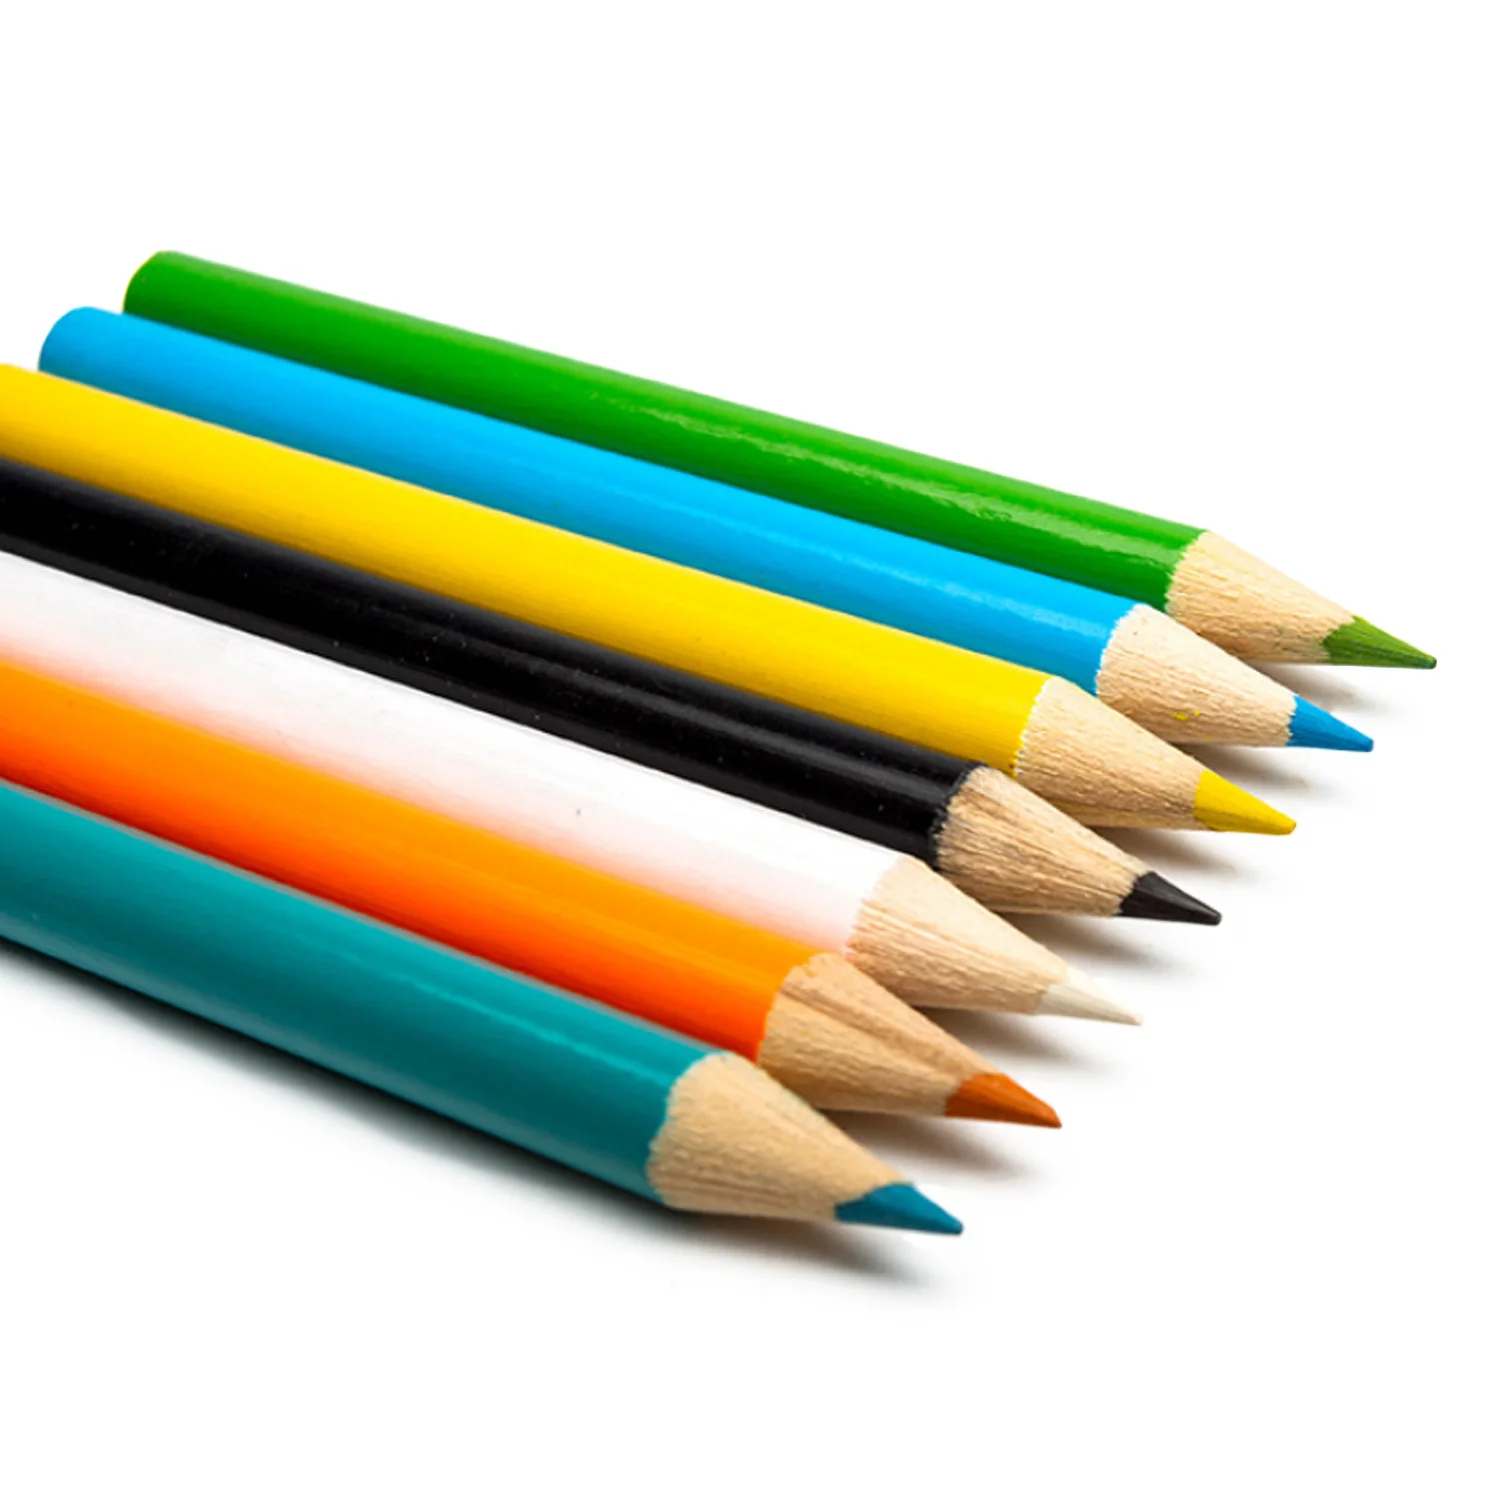 https://ae01.alicdn.com/kf/S04459b1dca6942b2b5743ad33ac6c6708/Colored-Pencil-Artist-Drawing-set-Painting-Graffiti-Brush-Crayon-Marker-Pen-kids-Gift-Daliy-Entertainment-Toy.jpg